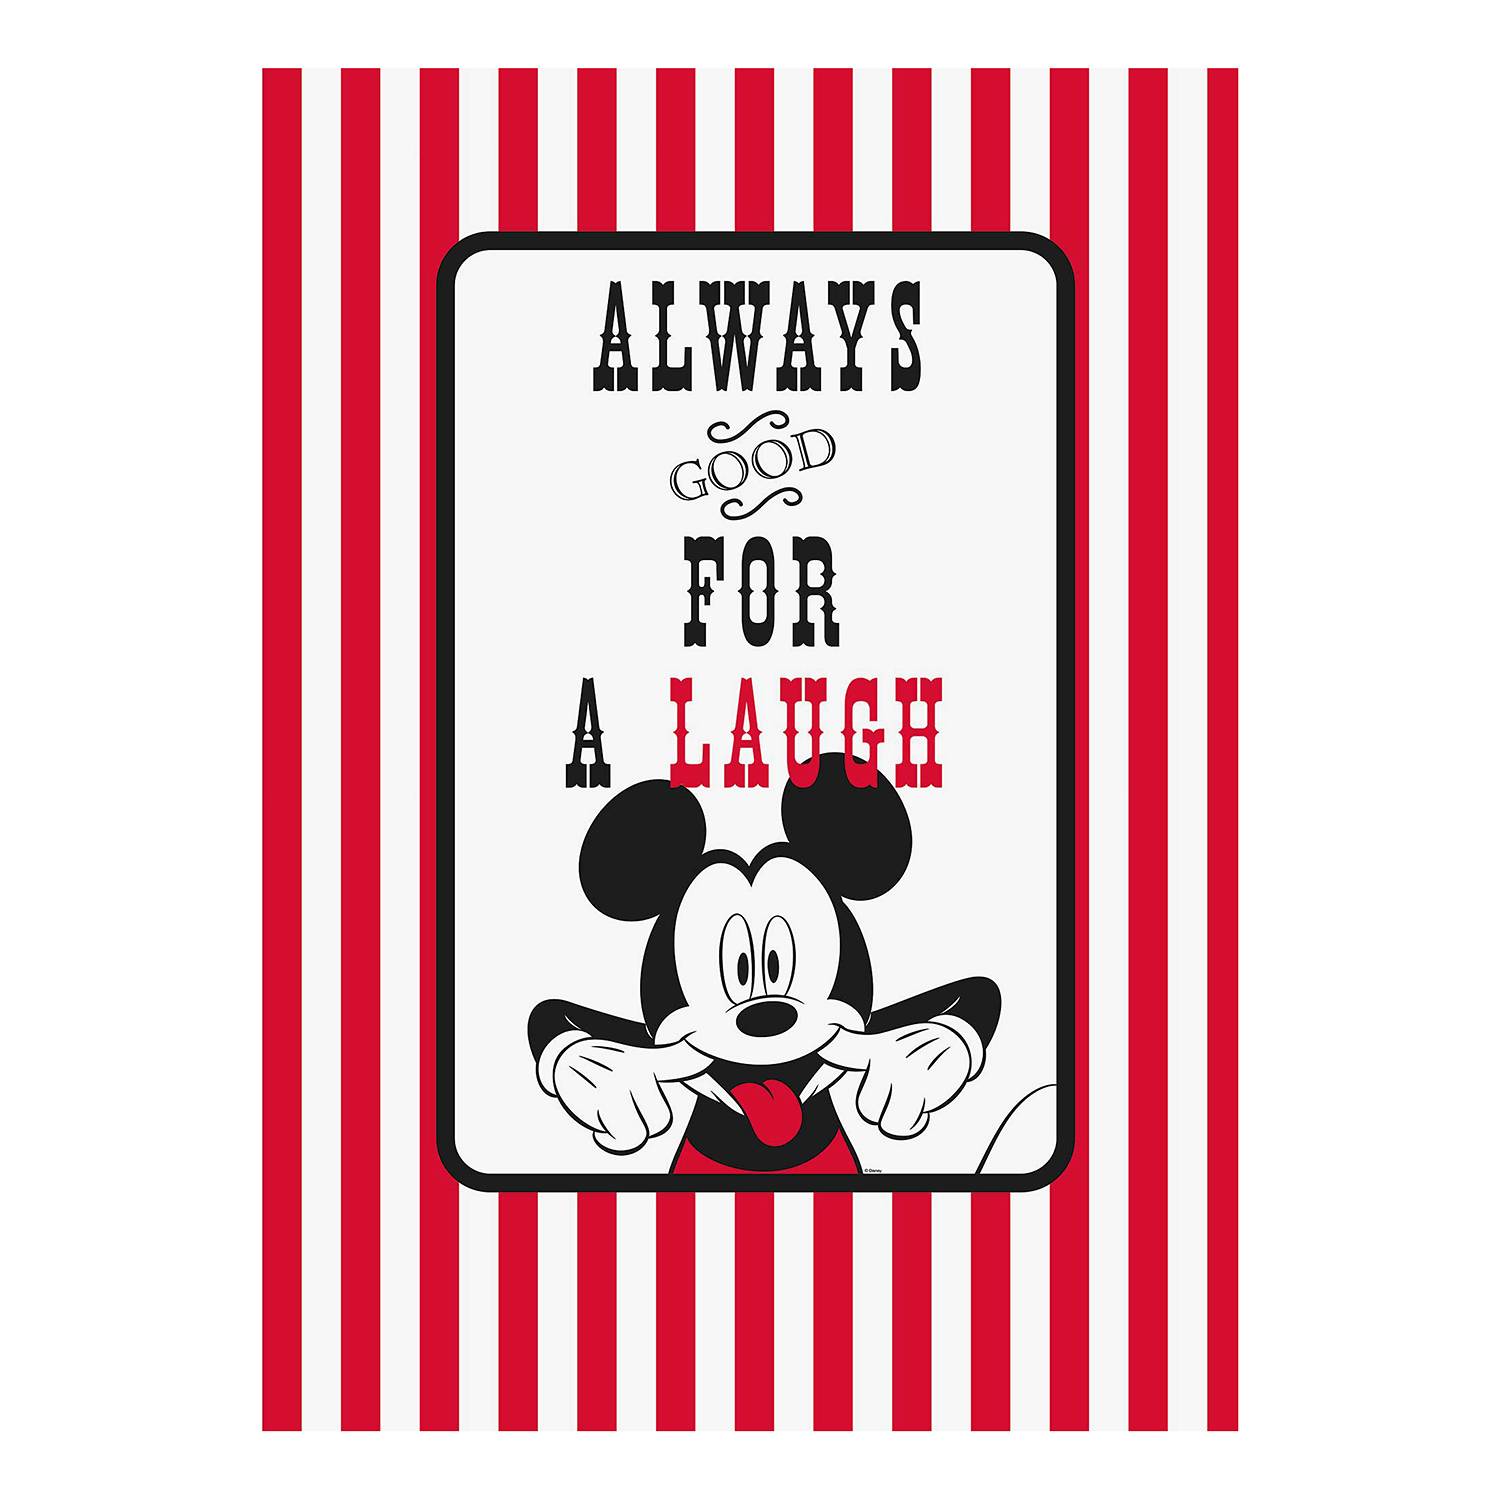 Wandbild Mickey Mouse Laugh kaufen | home24